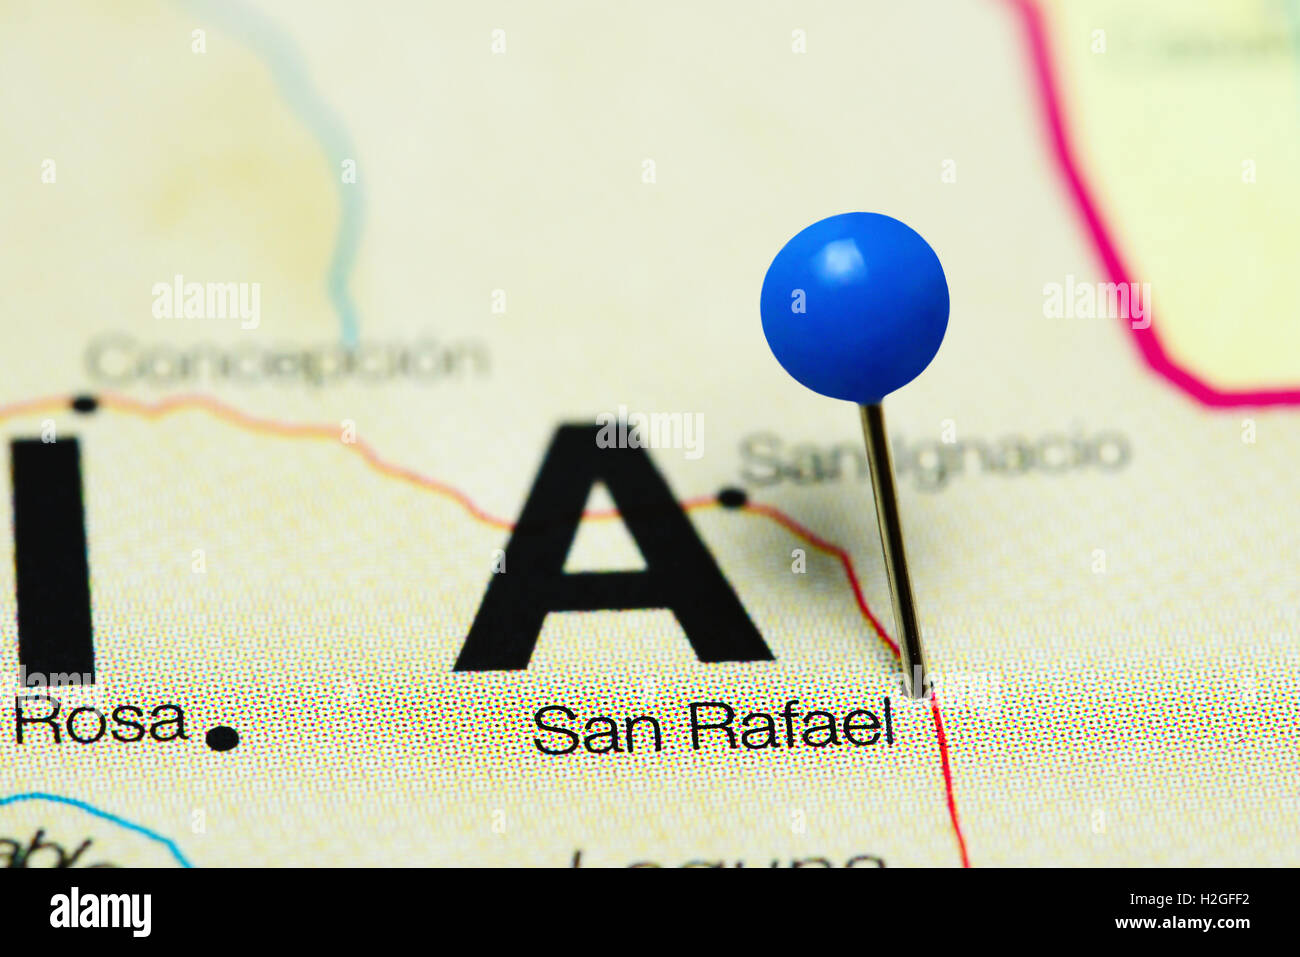 San Rafael anclado en un mapa de Bolivia Foto de stock